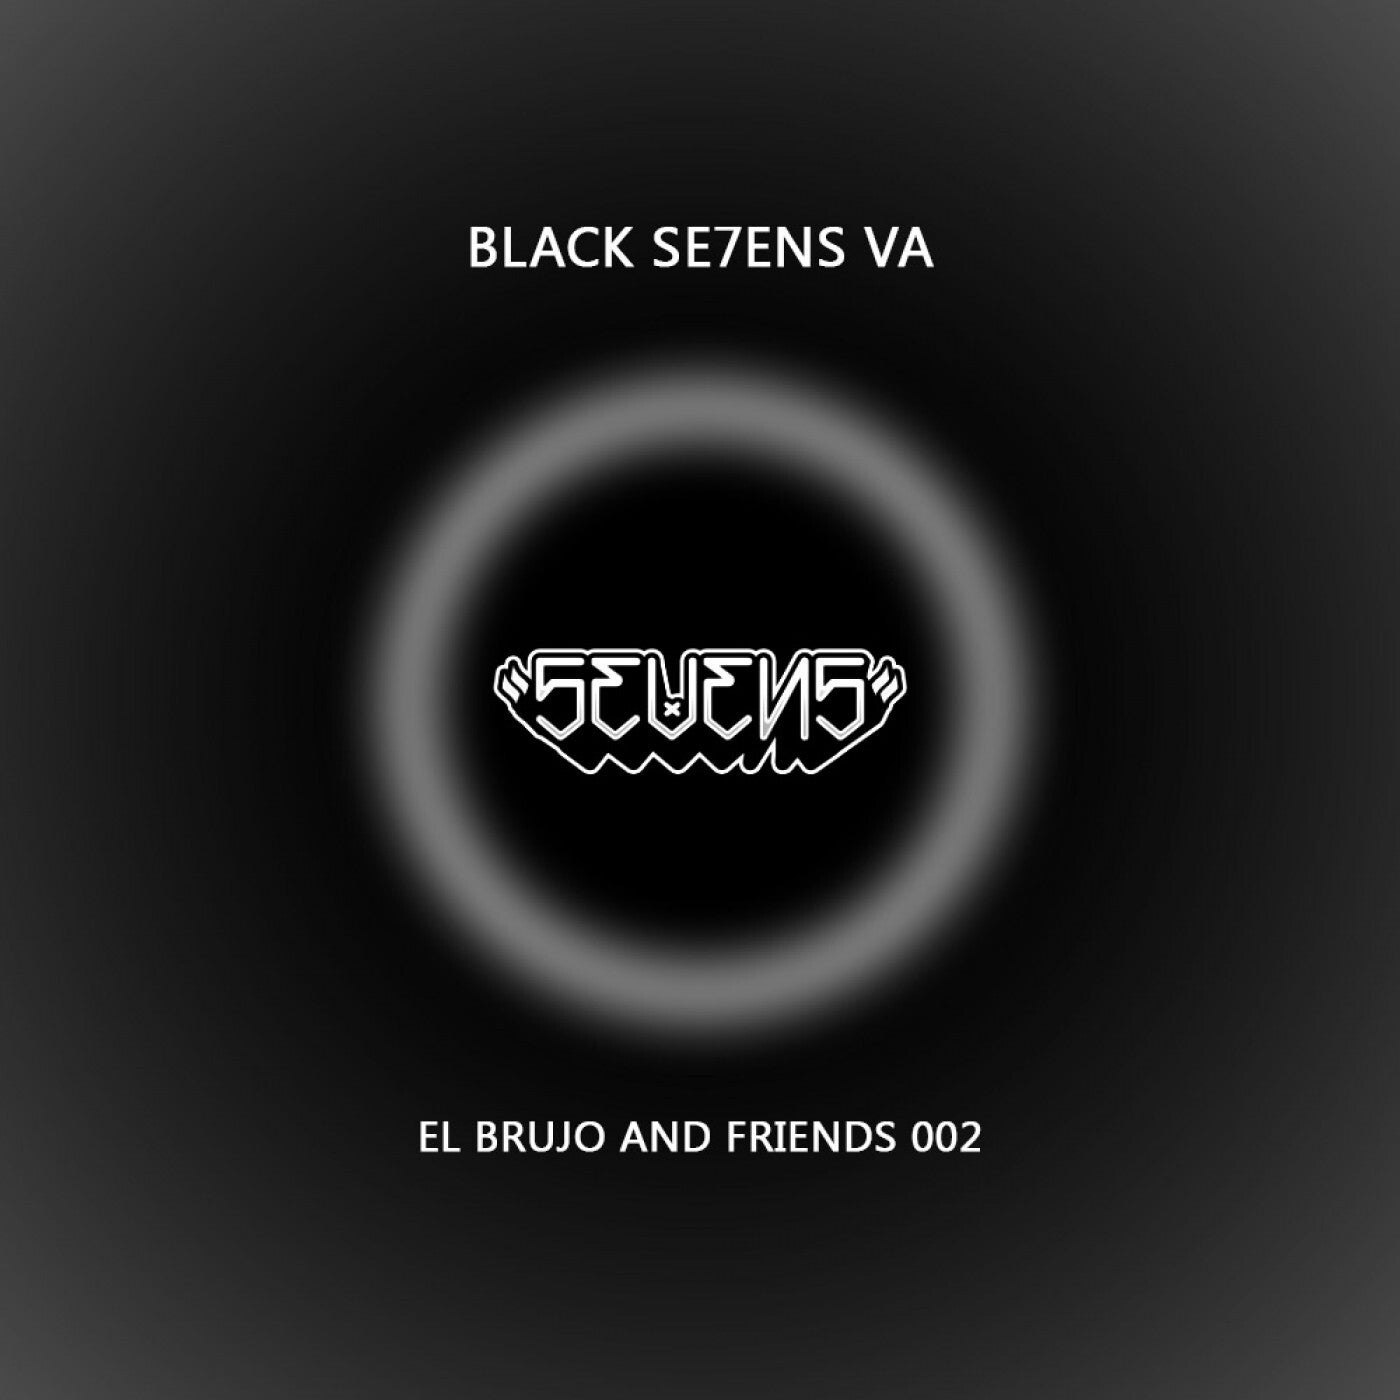 El Brujo & Friends Black SE7ENS VA 002